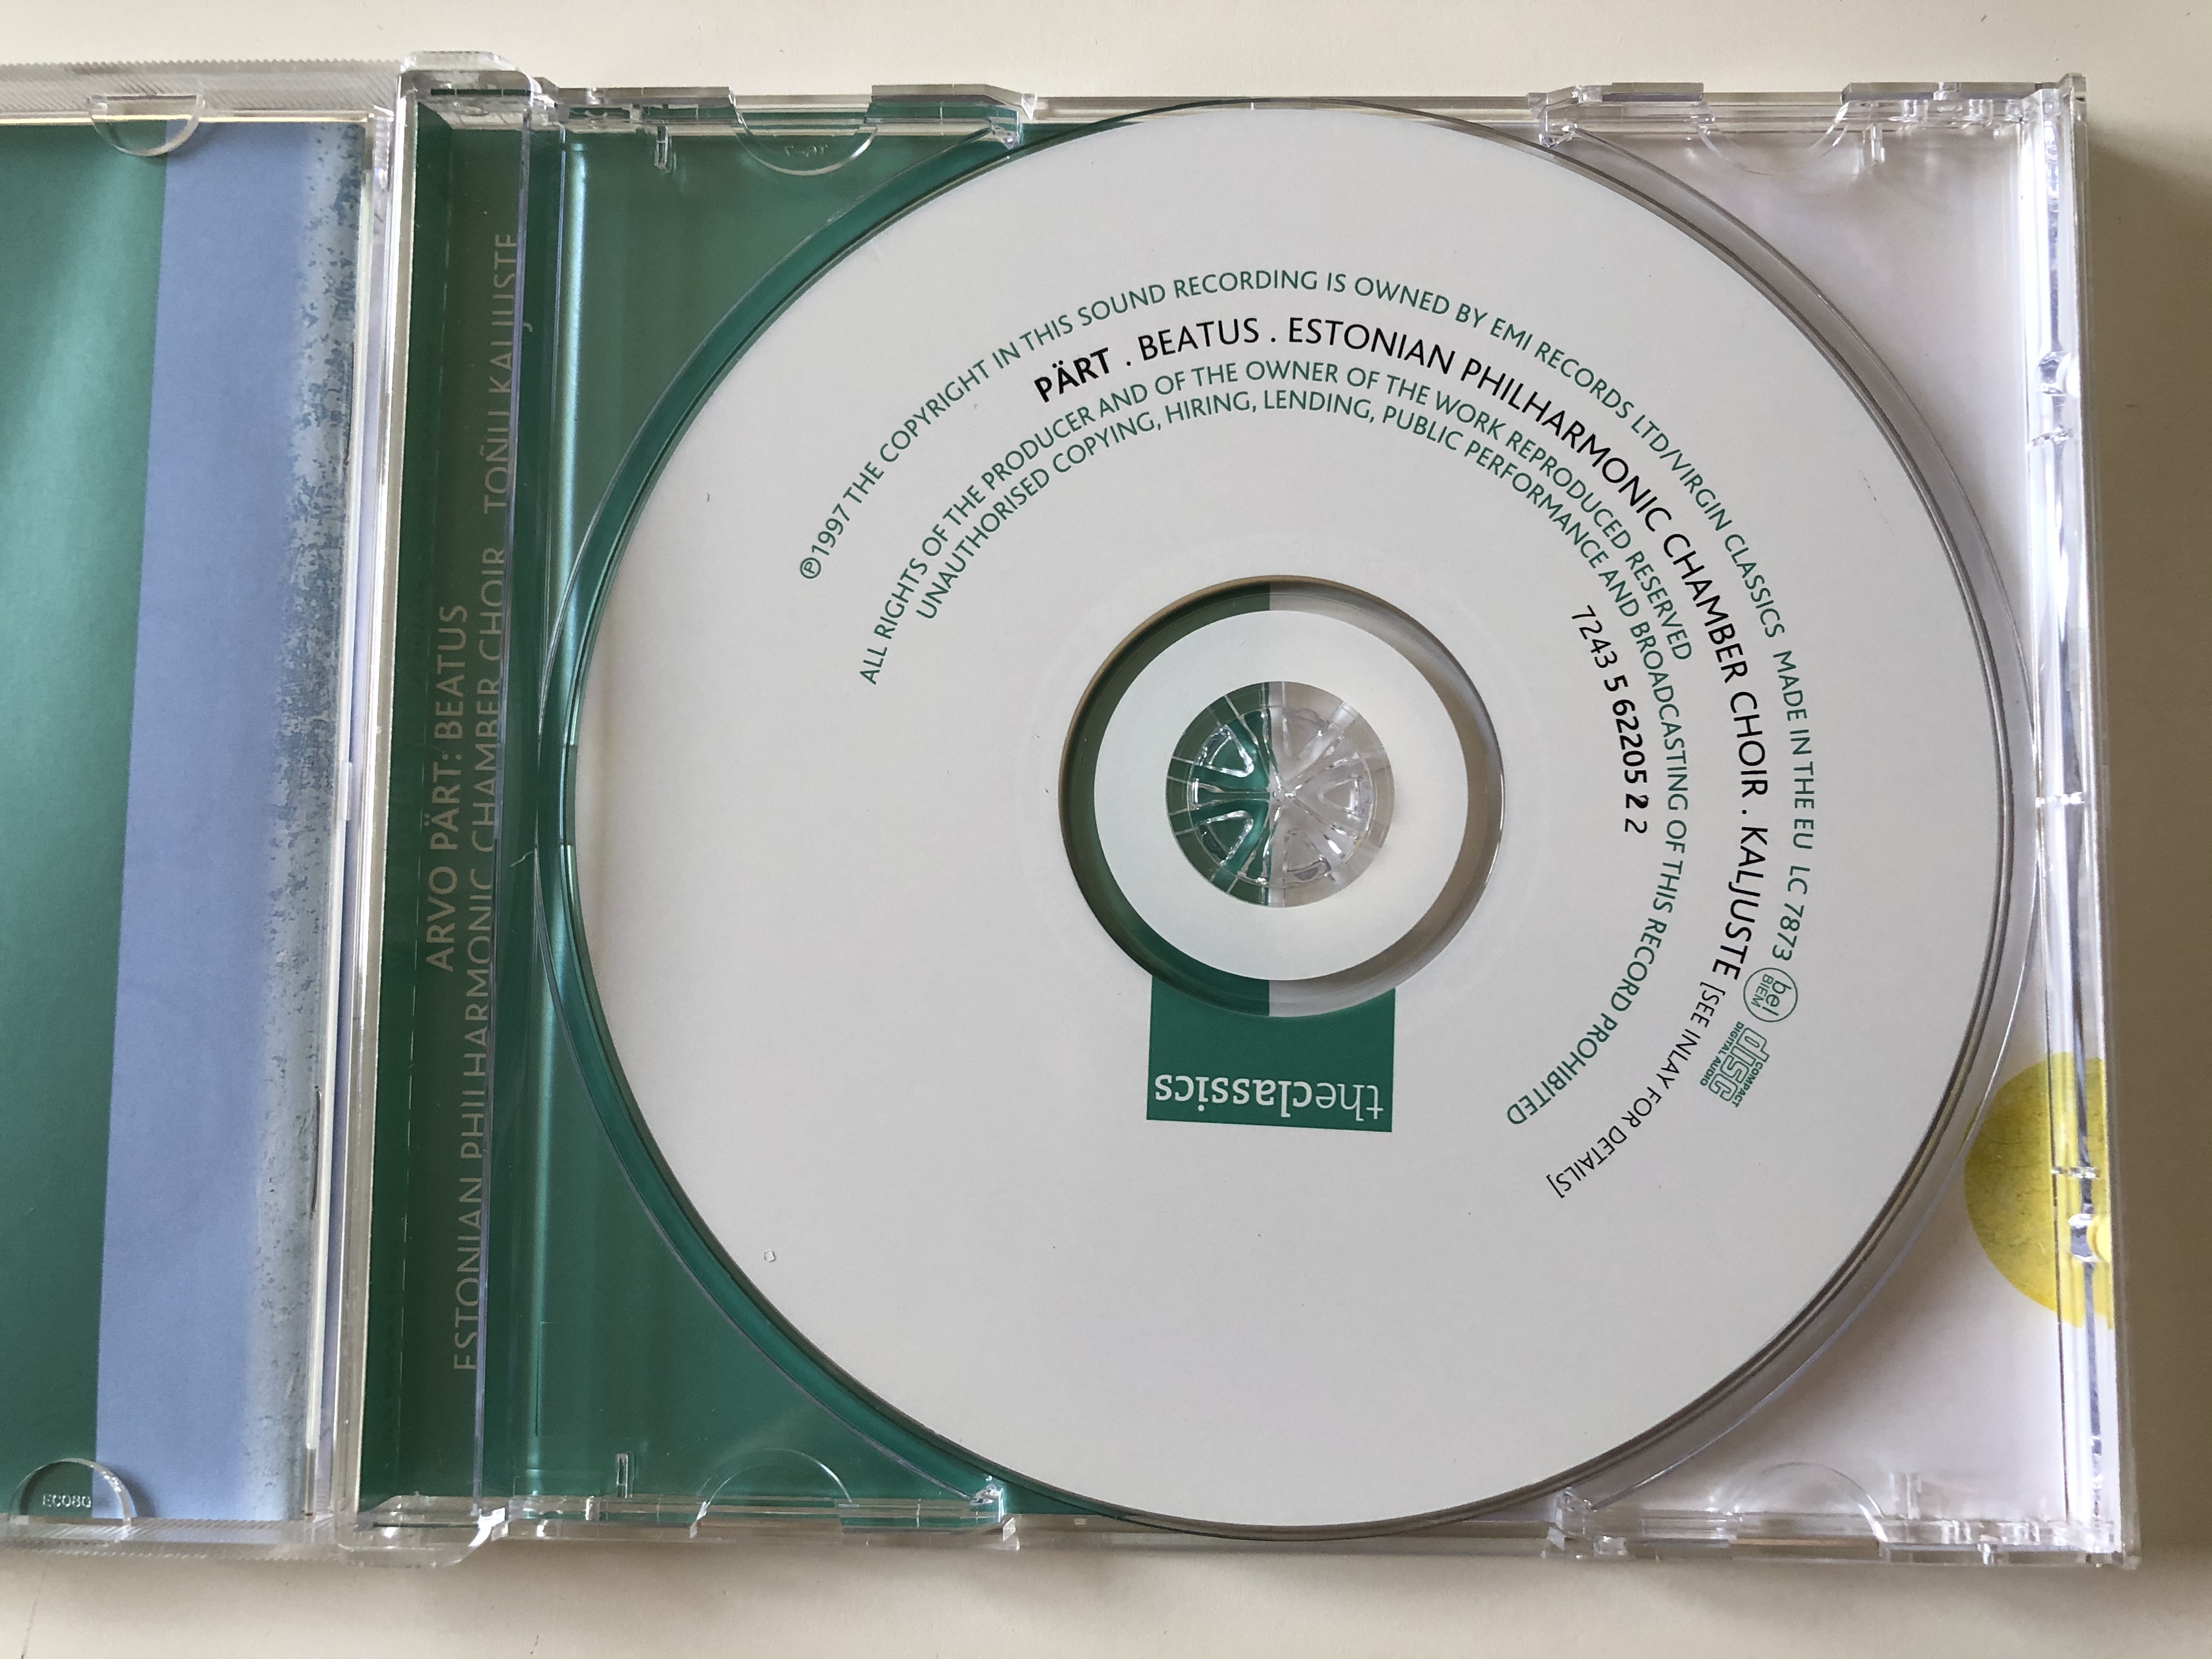 arvo-p-rt-beatus-estonian-philharmonic-chamber-choir-t-nu-kaljuste-virgin-classics-audio-cd-1997-724356220522-3-.jpg